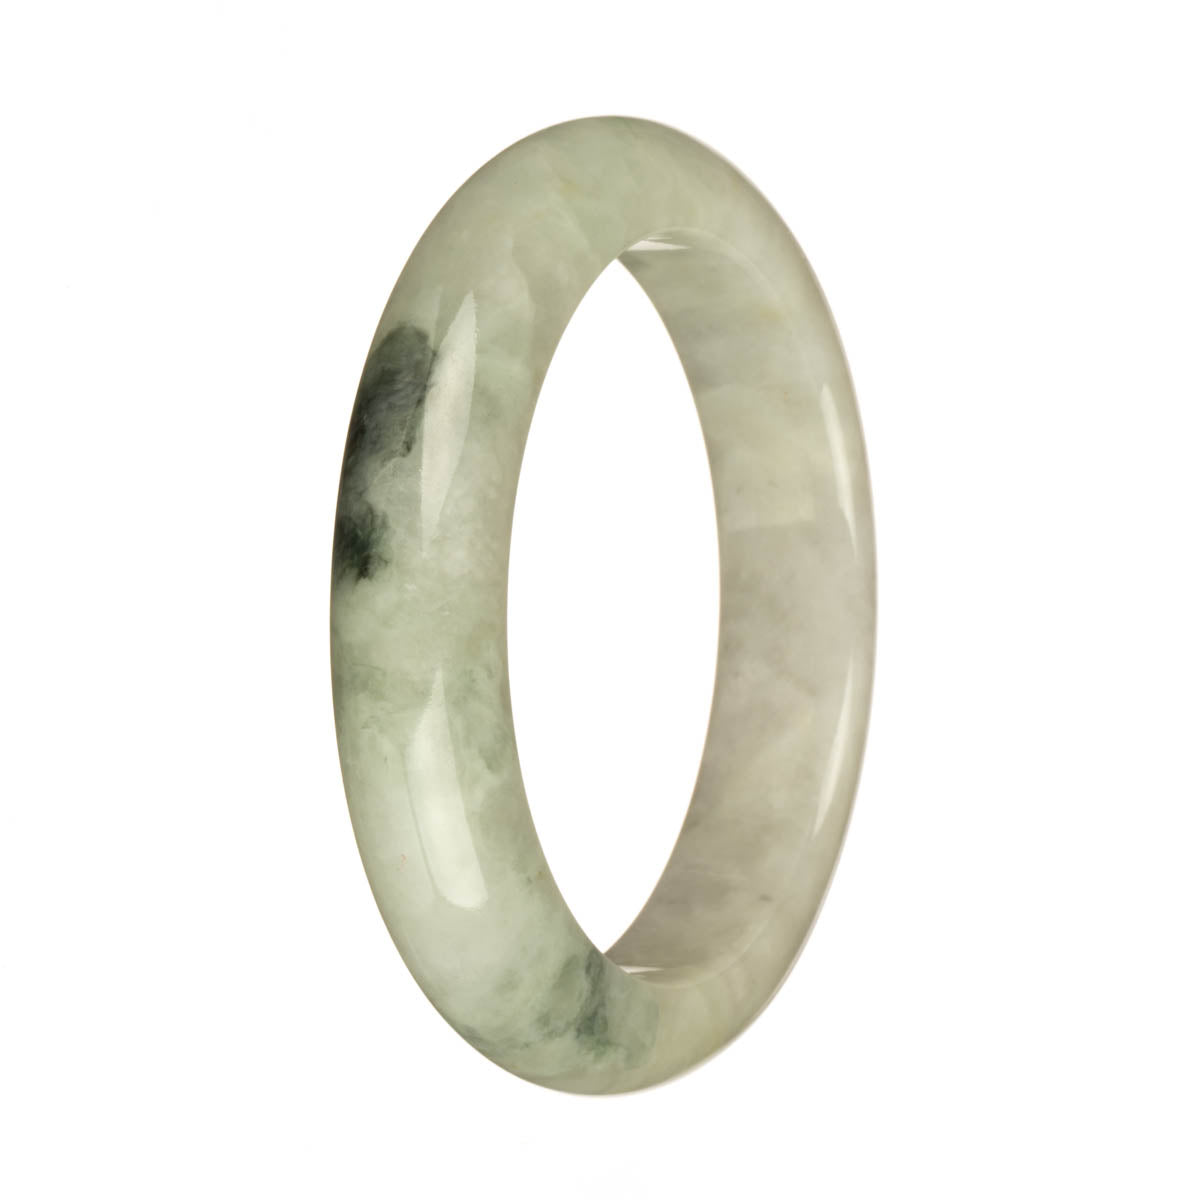 Genuine Type A Greyish White with Deep Green Patterns Jade Bangle Bracelet - 58mm Half Moon